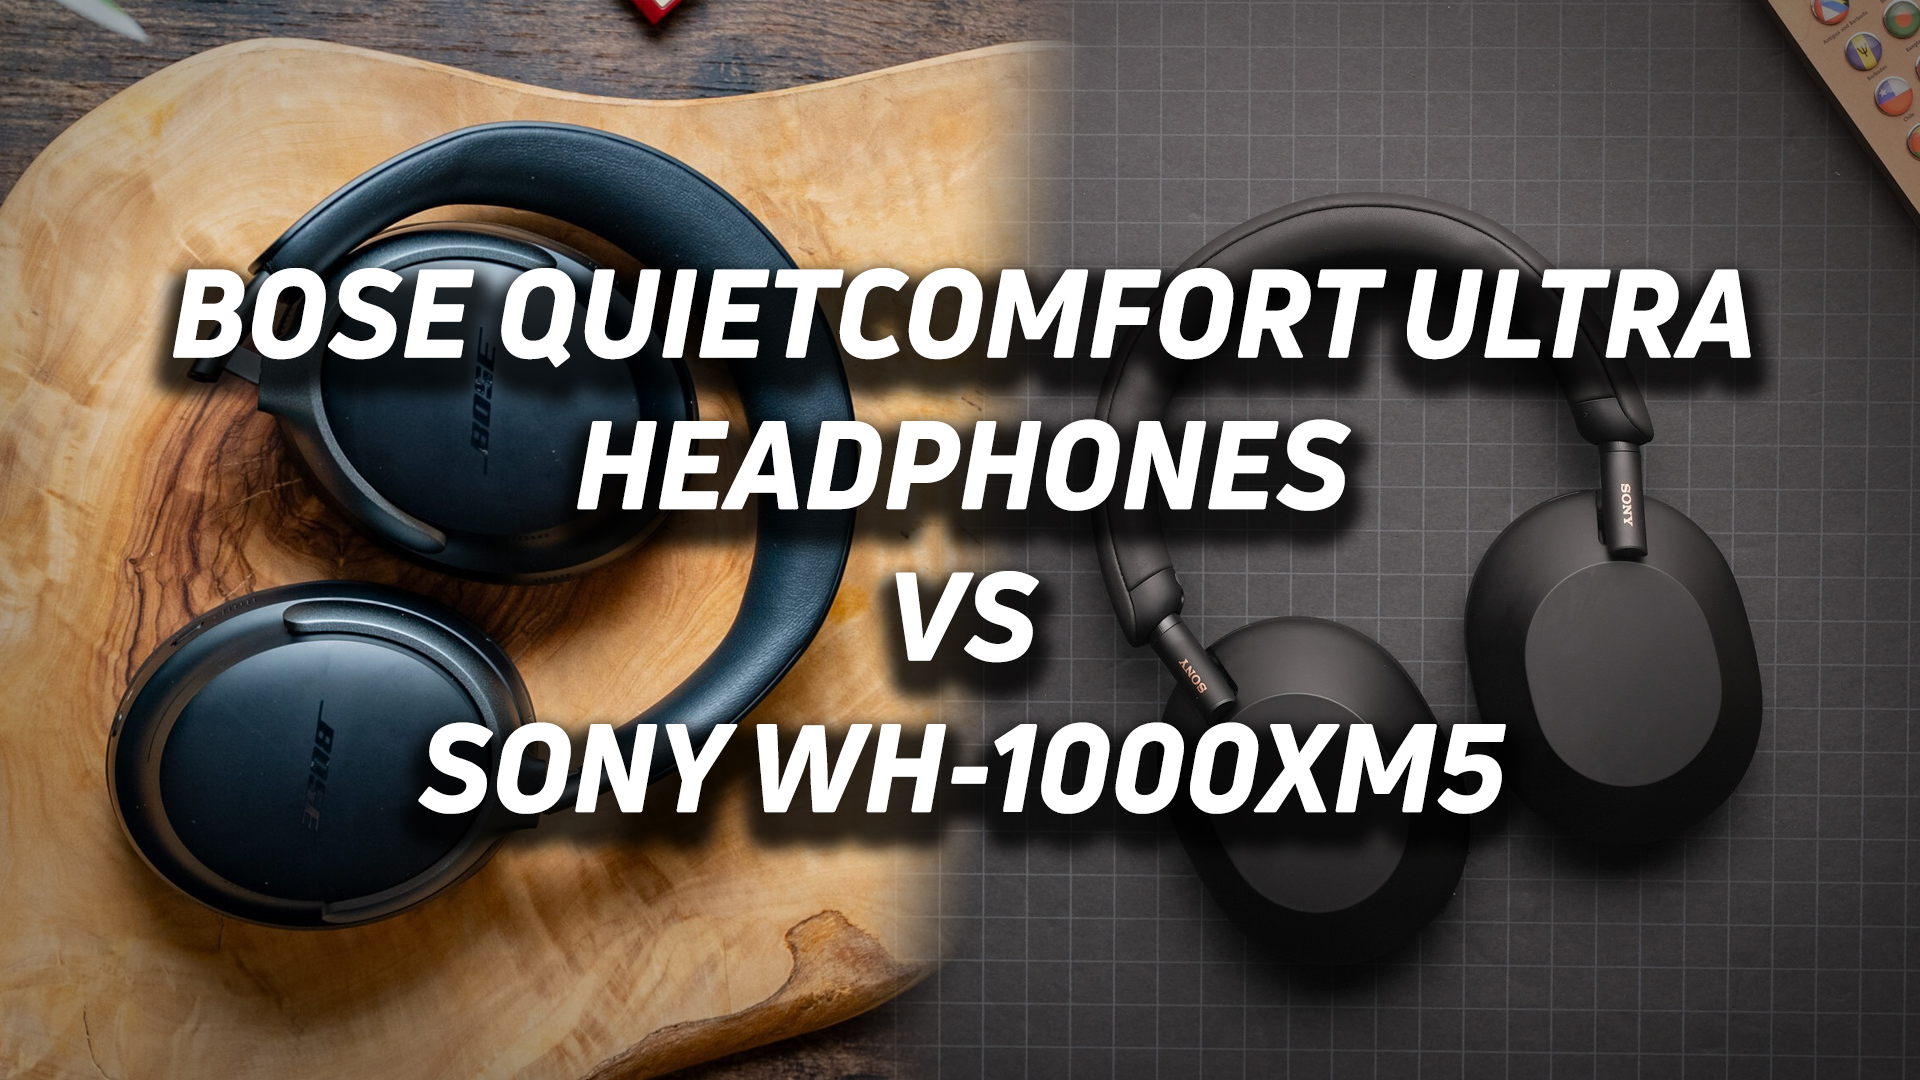 Casque Bose Quietcomfort Ultra contre Sony WH-1000XM5 : r/bose